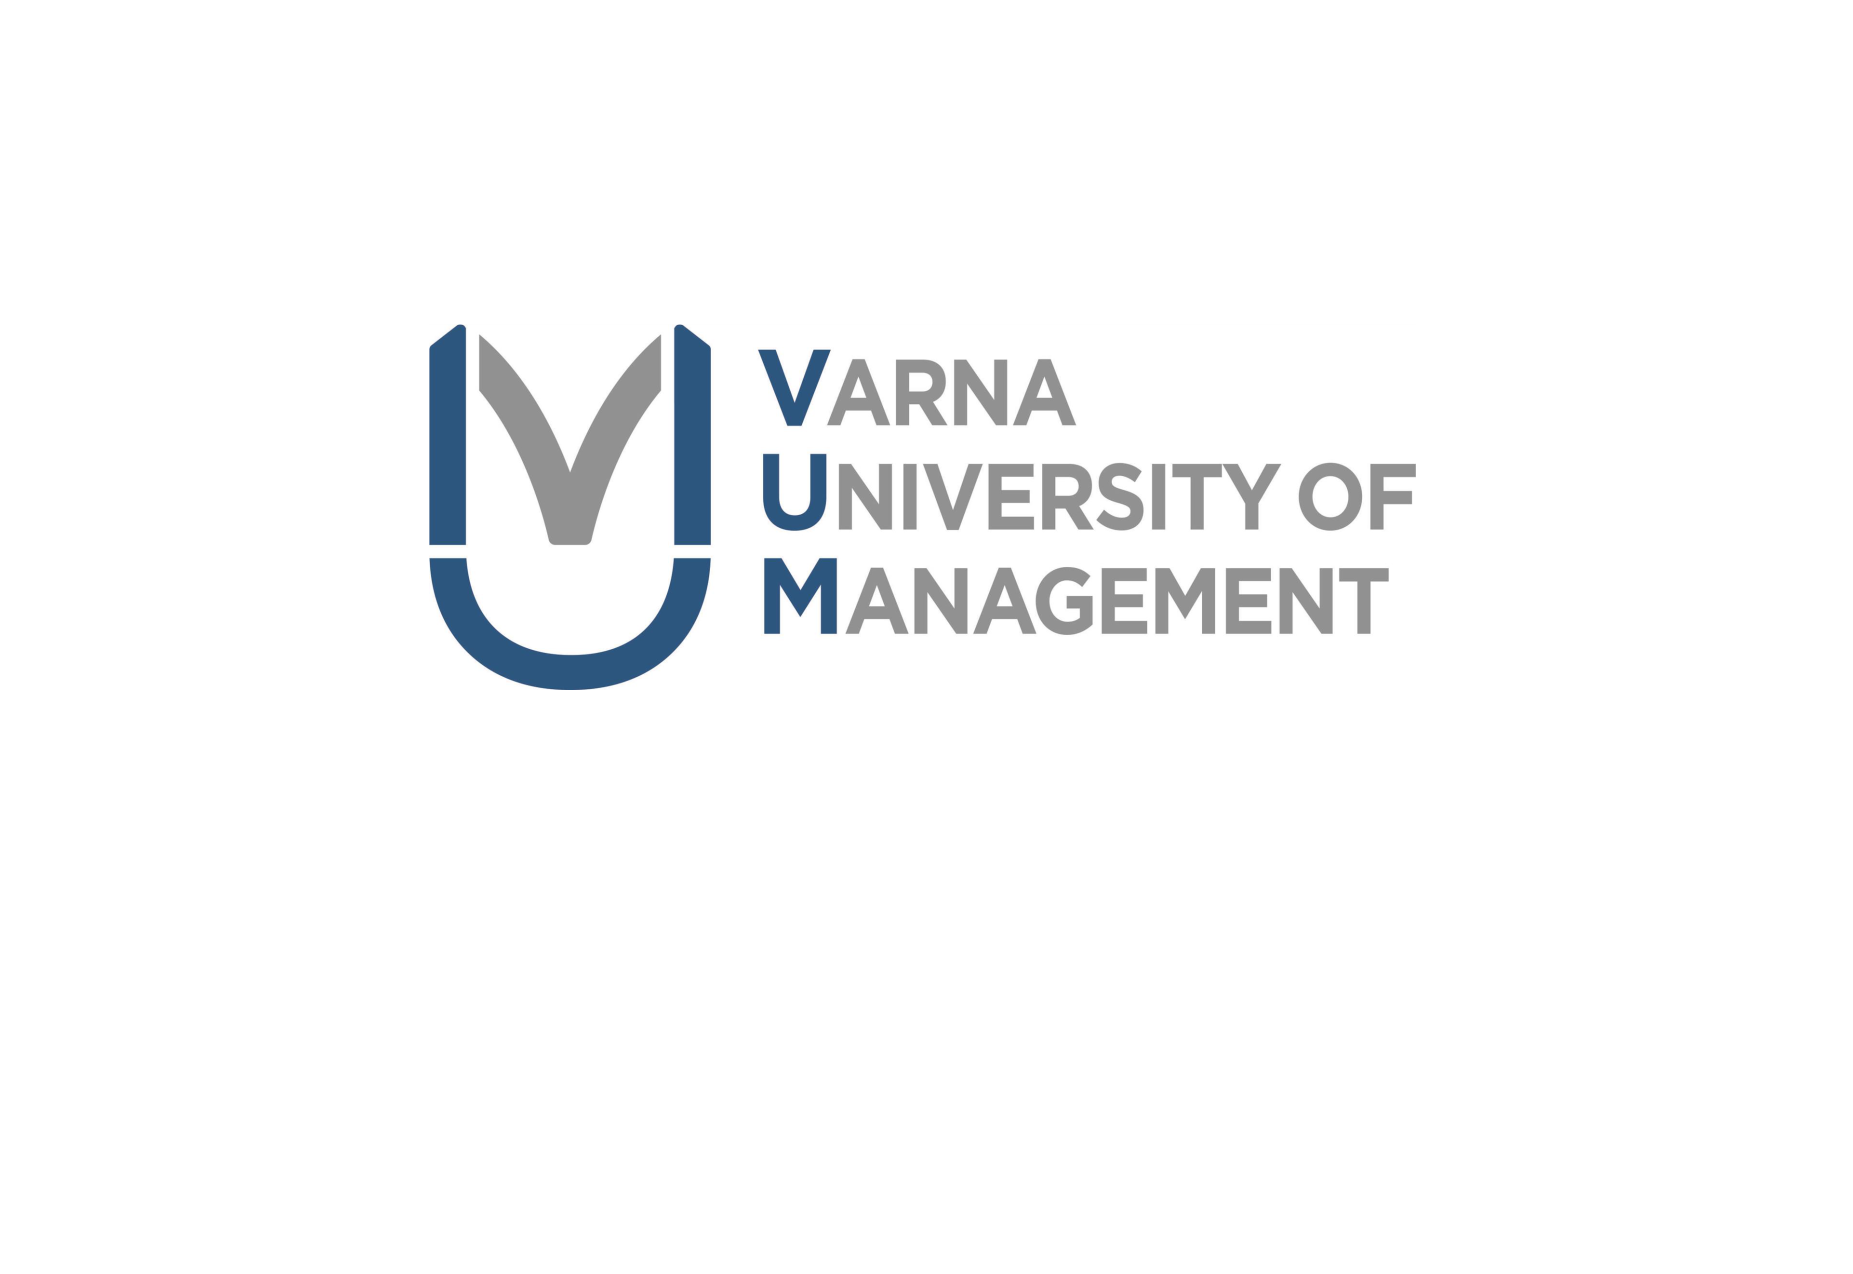 Varna University of Management (BG)